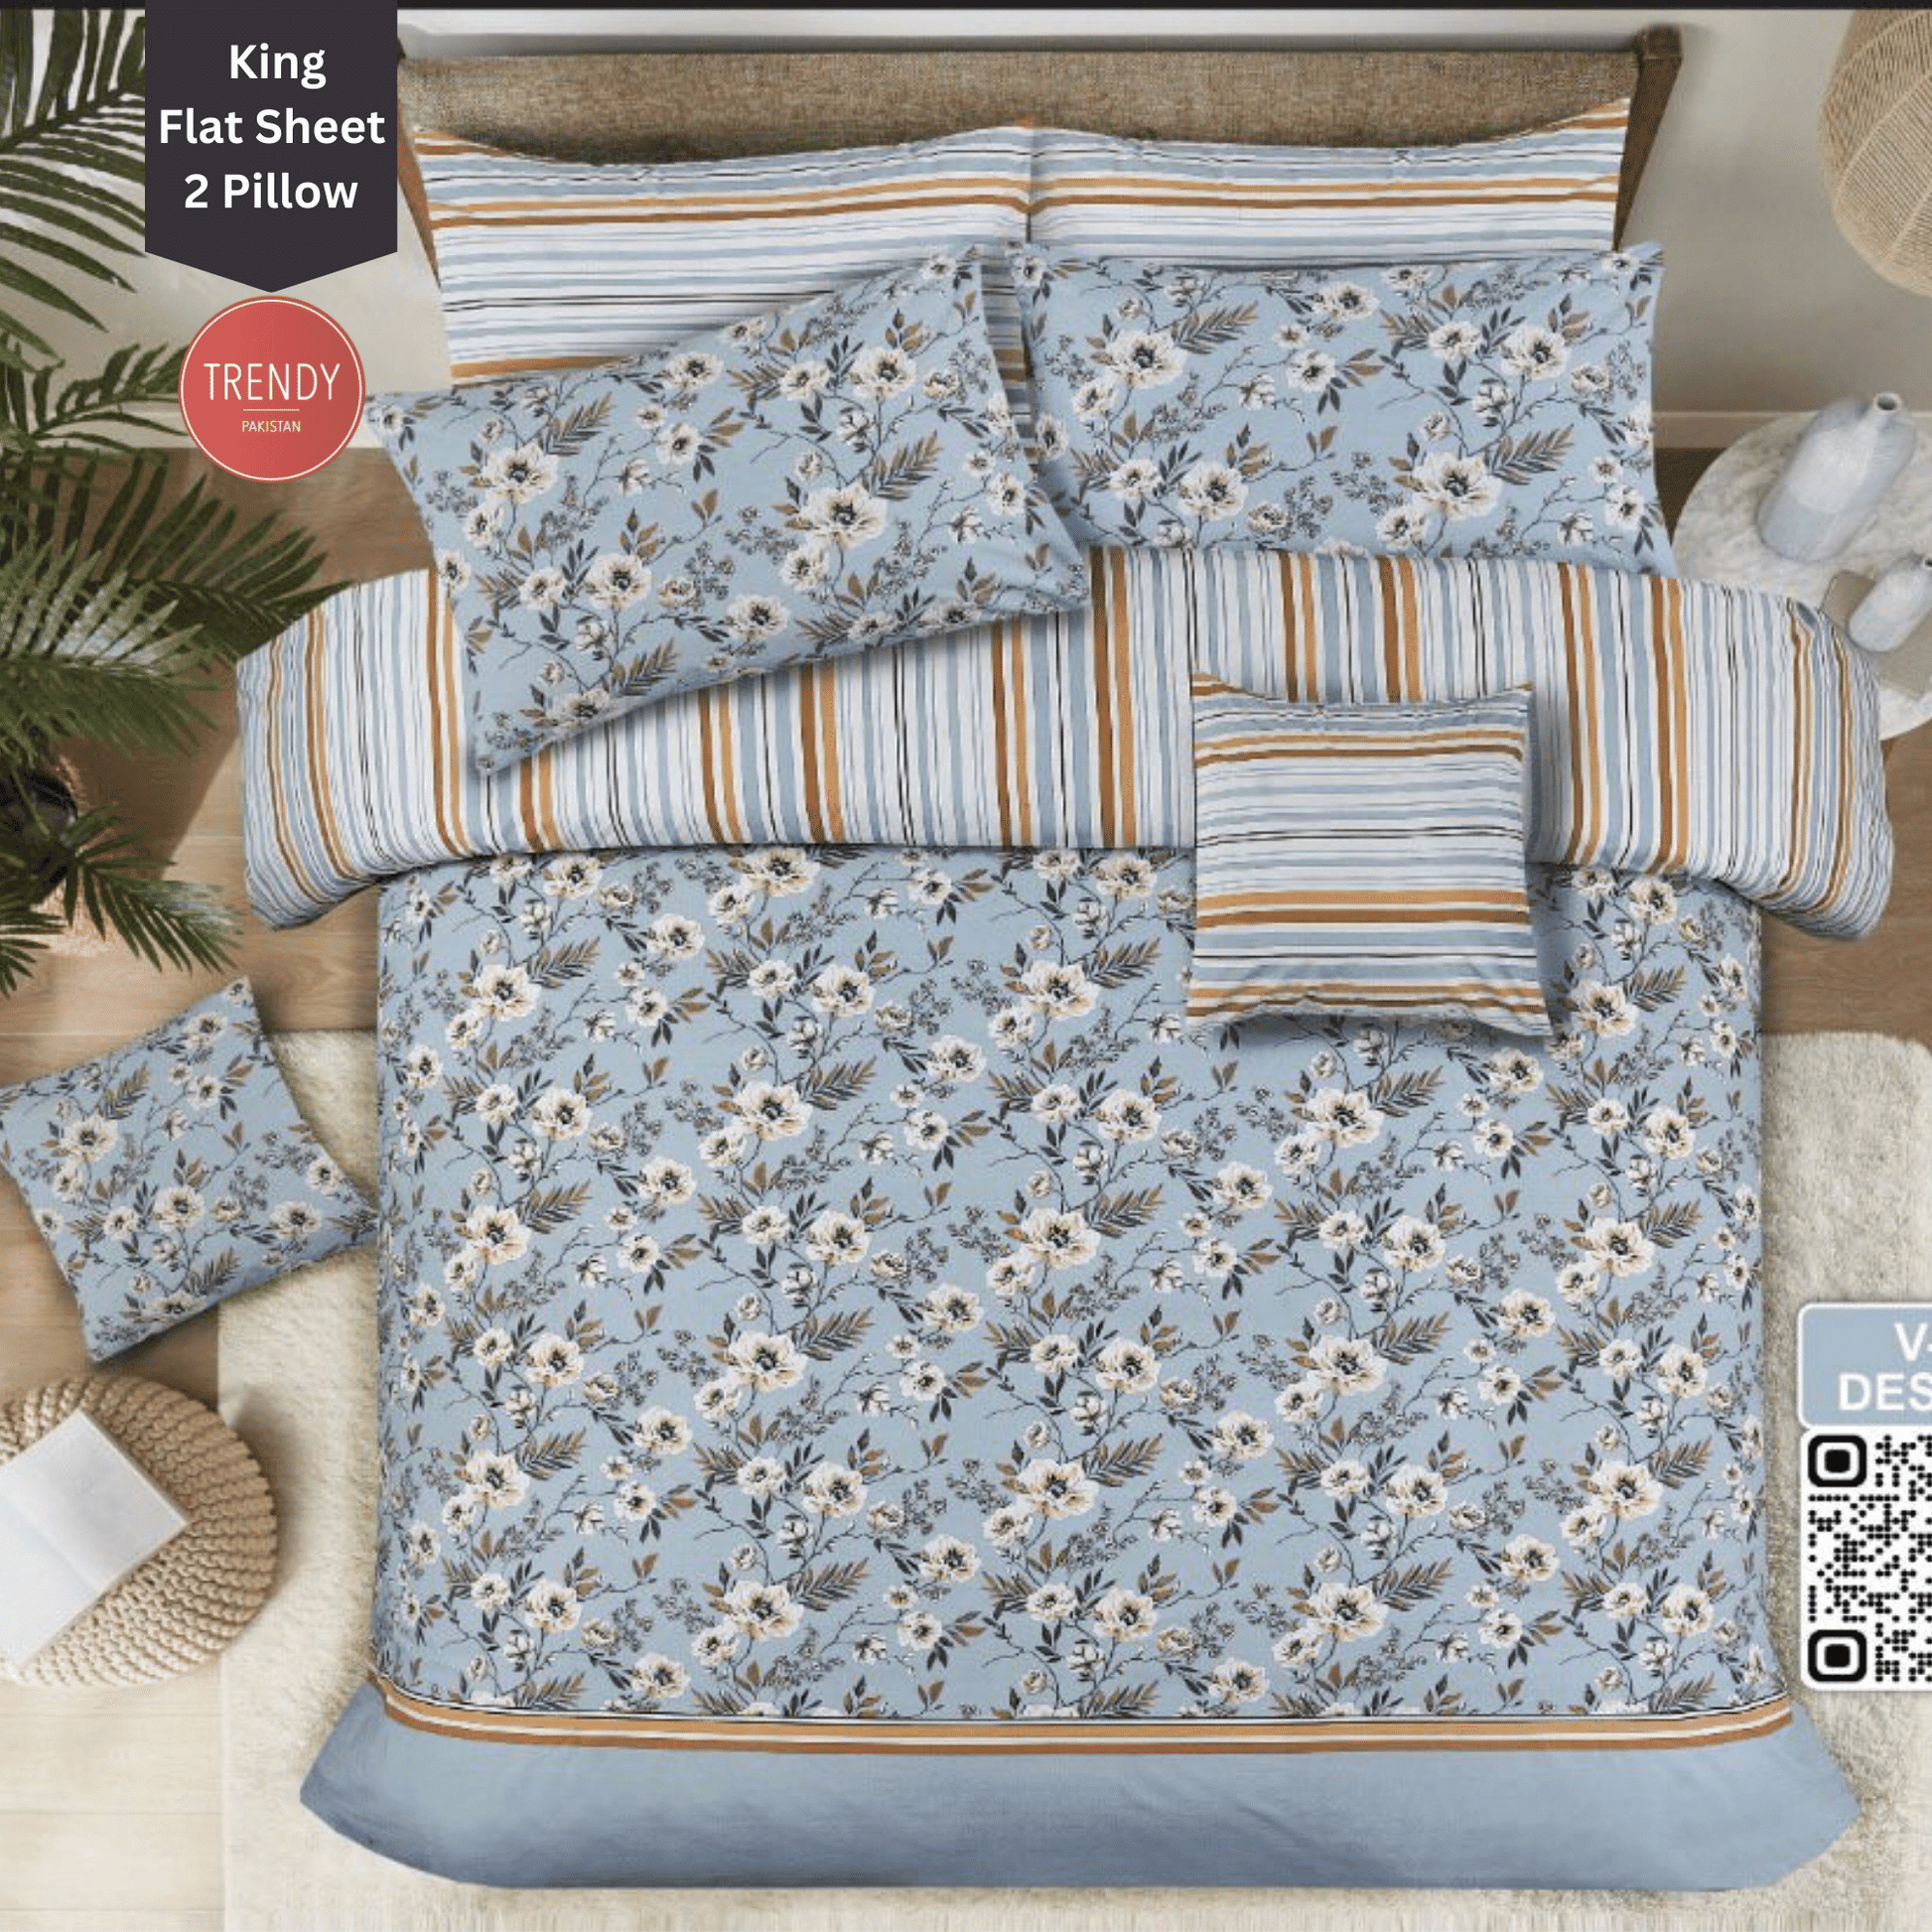 Trendy Bed Sheet